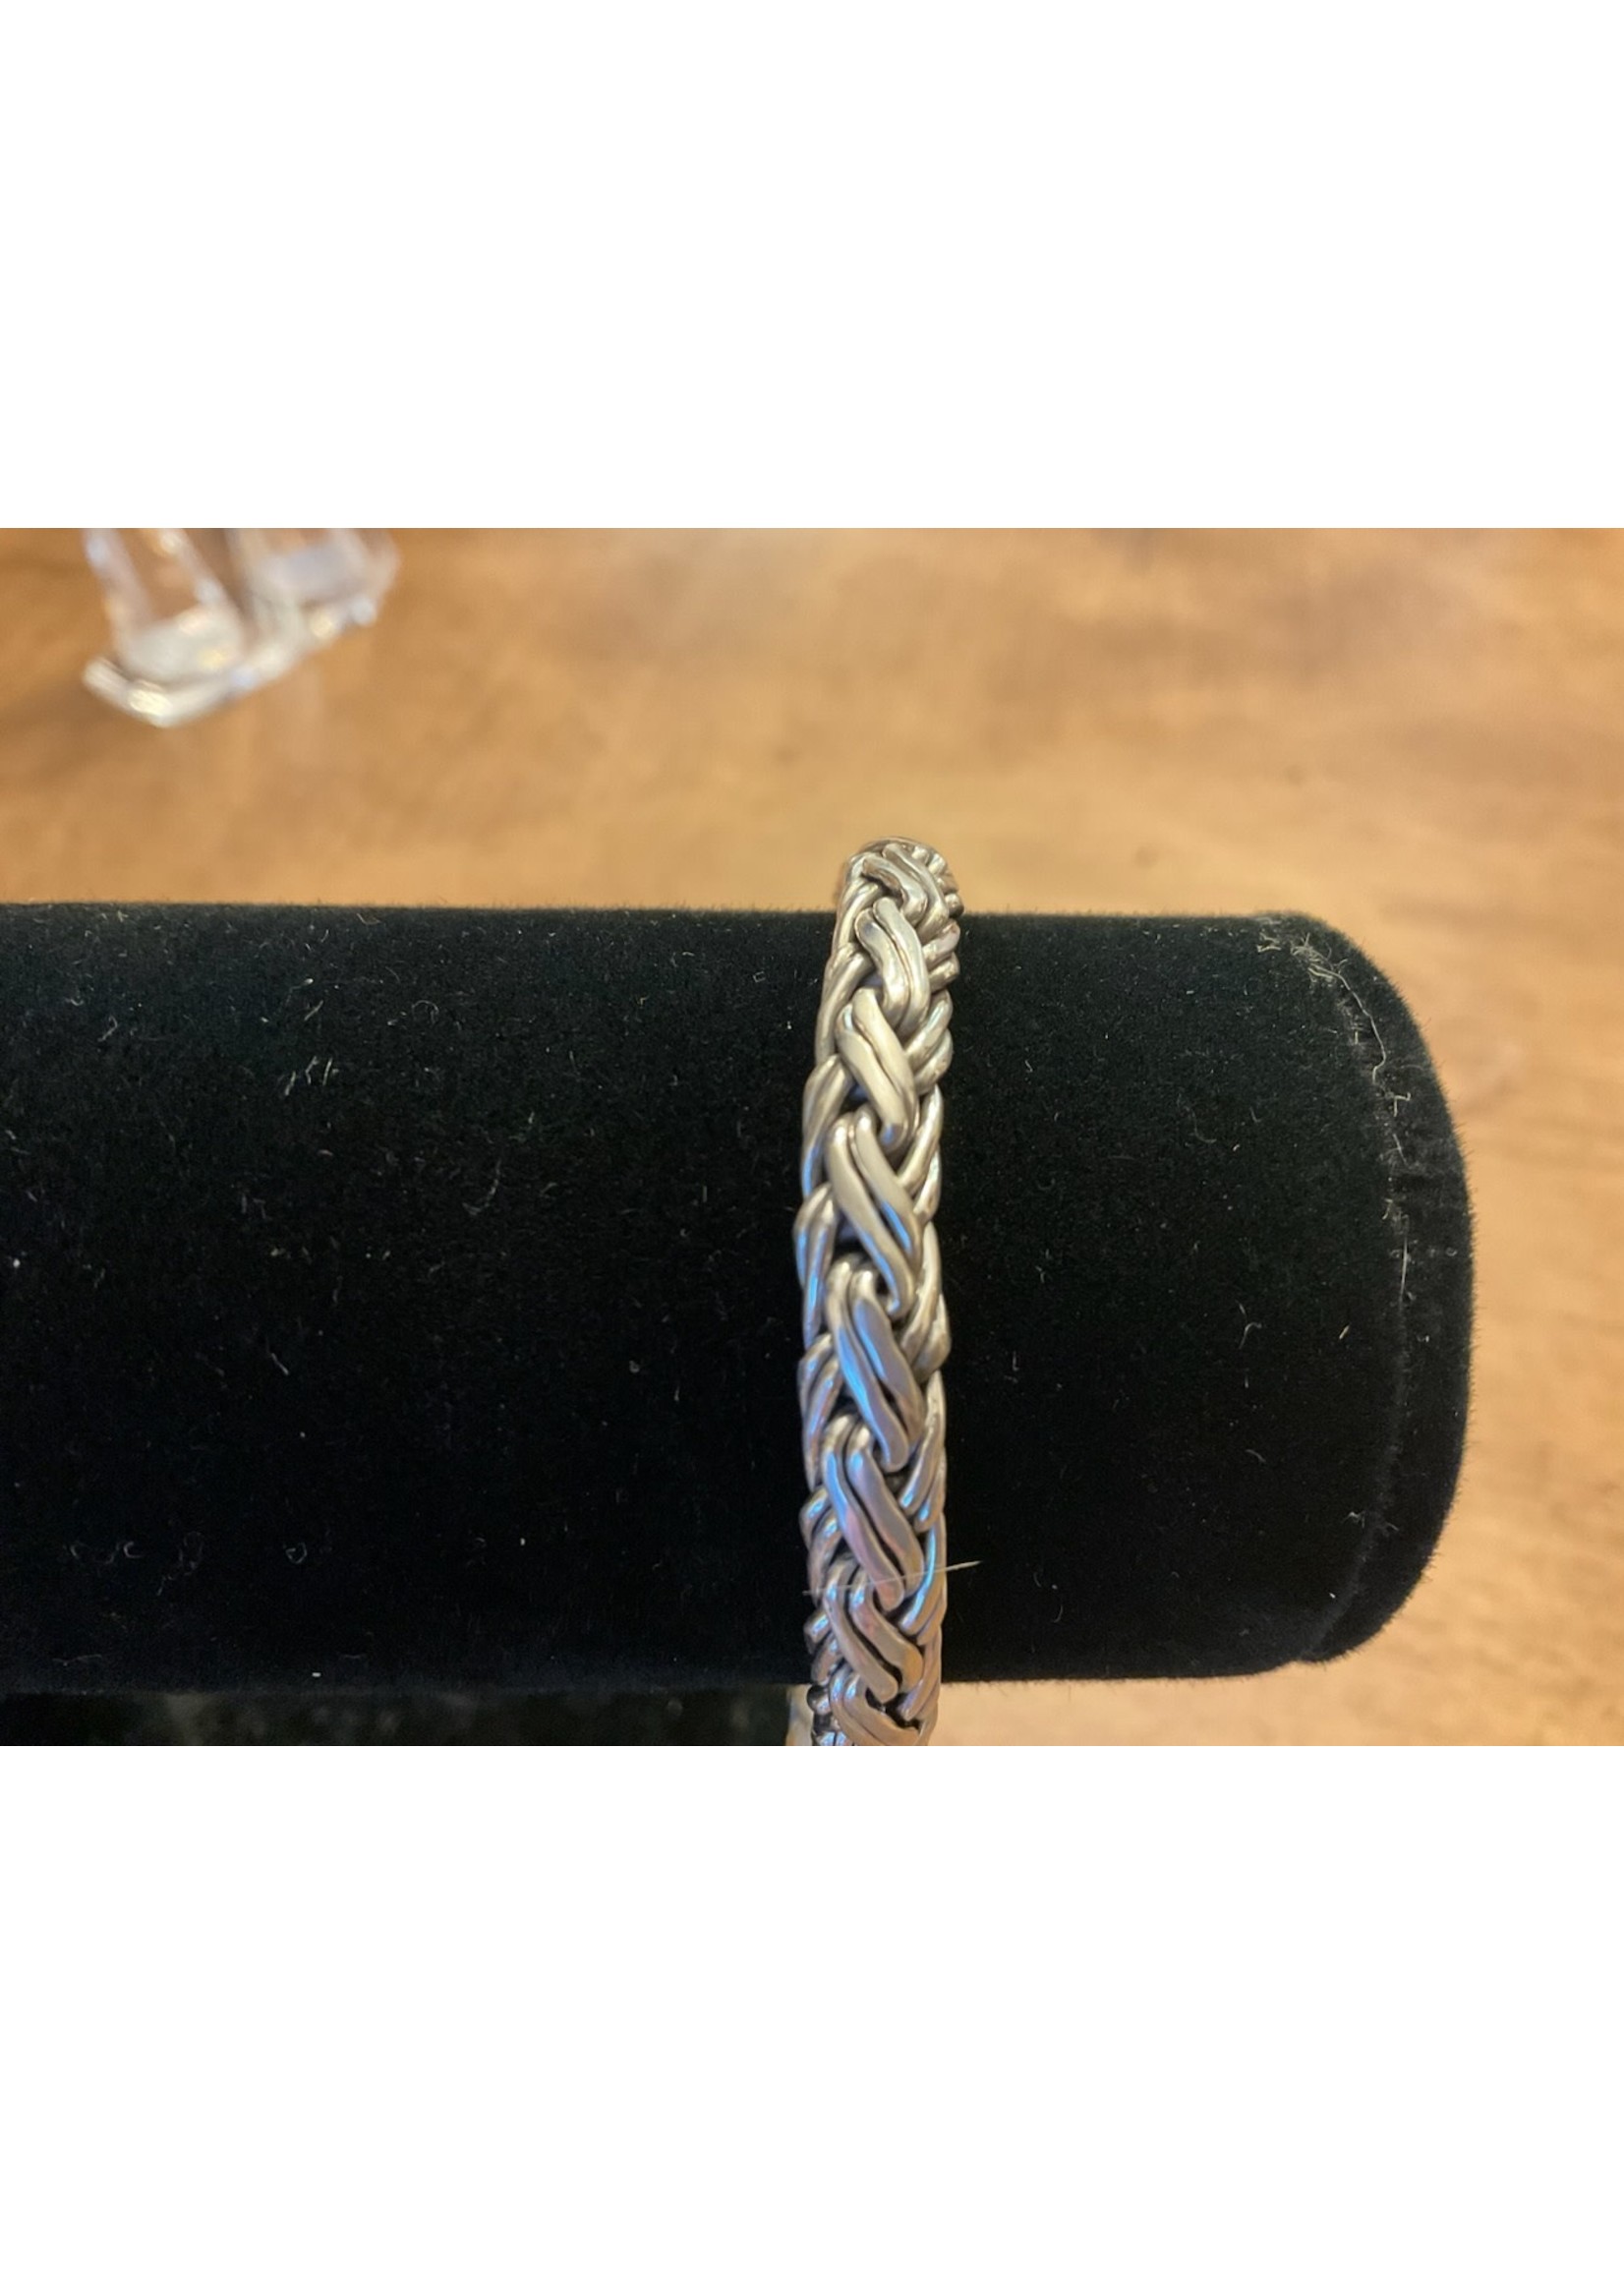 Sterling Silver Heavy Twisted Rope Bracelet - 9”